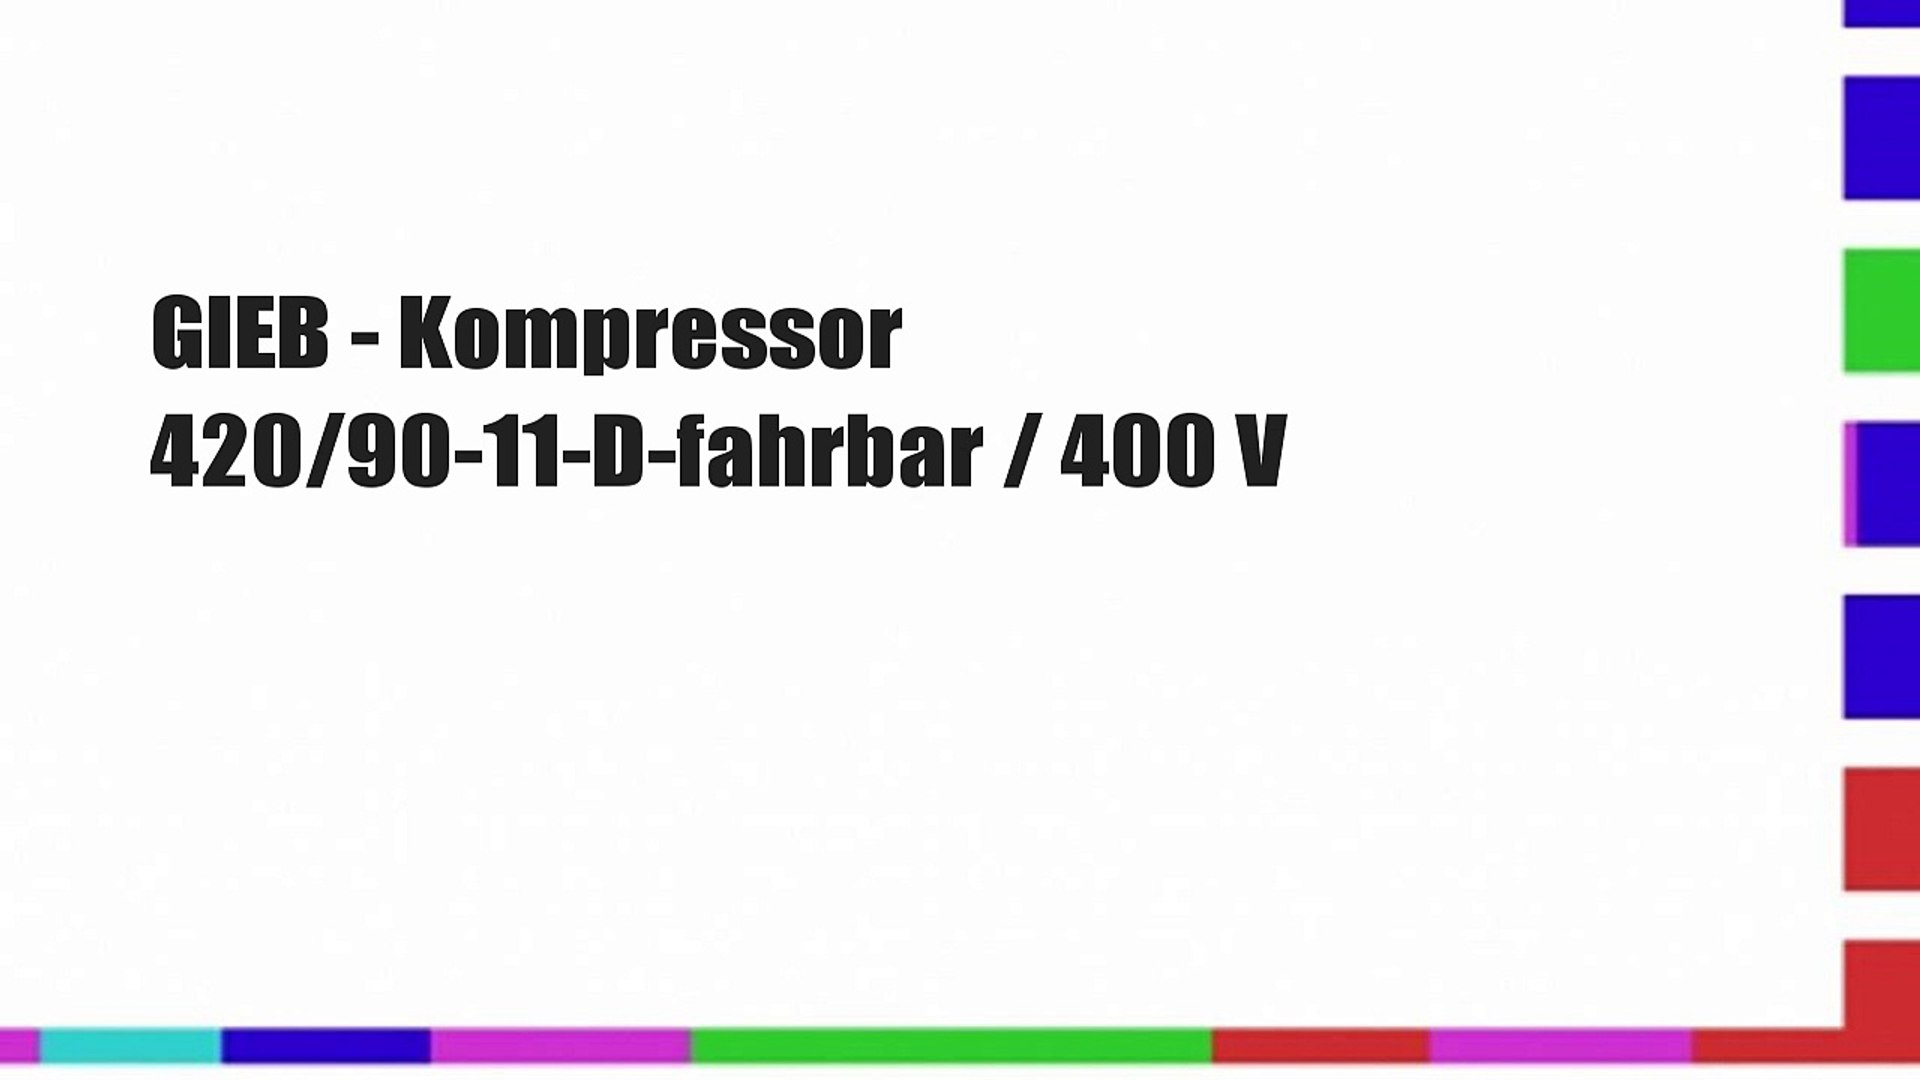 GIEB - Kompressor 420/90-11-D-fahrbar / 400 V - video Dailymotion